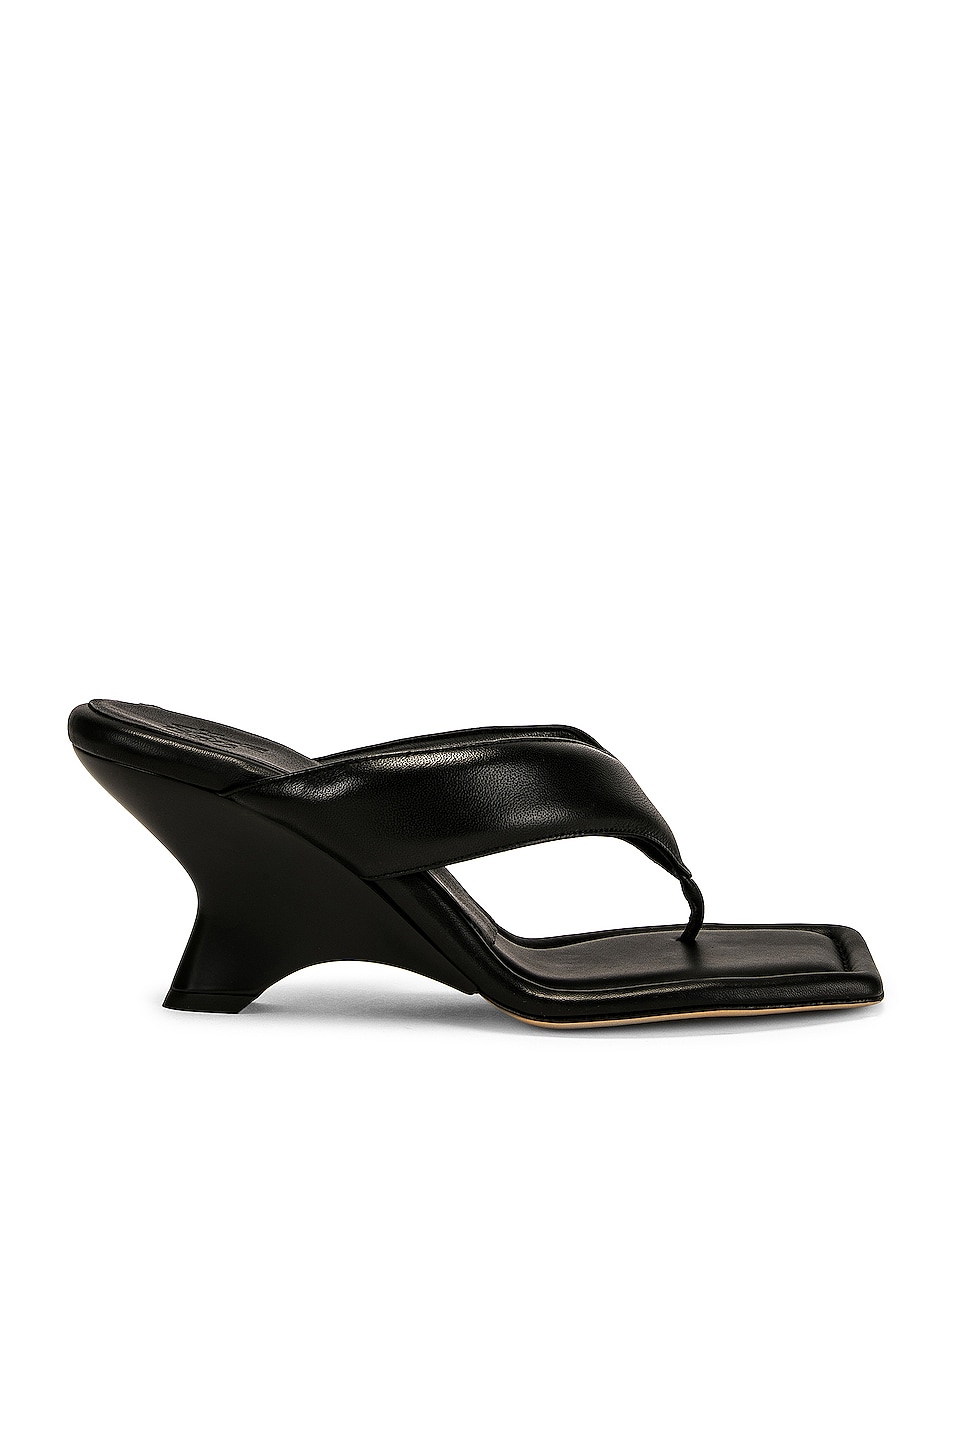 GIA BORGHINI Leather Thong Wedge Sandal in Black | FWRD